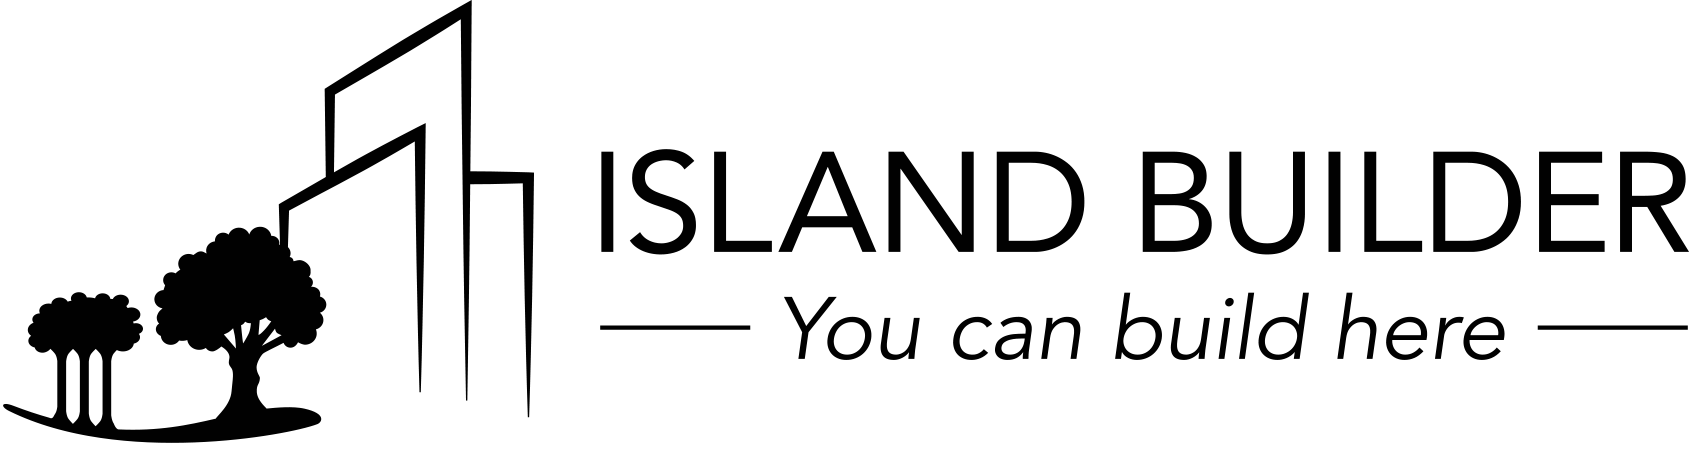 Island Builder Black Logo